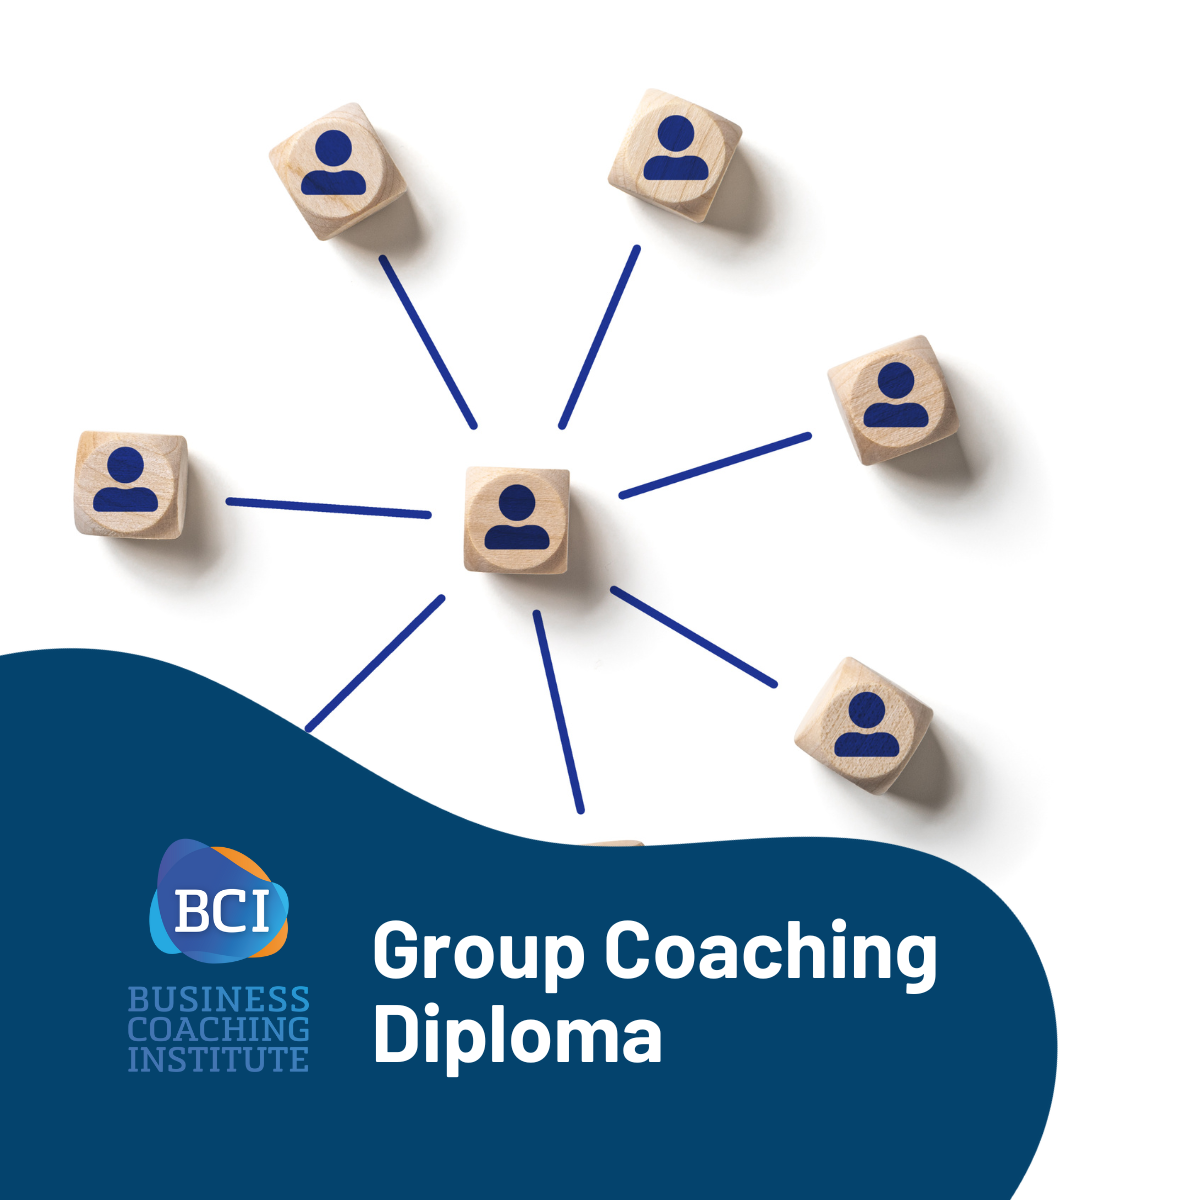 Group Coaching Diploma